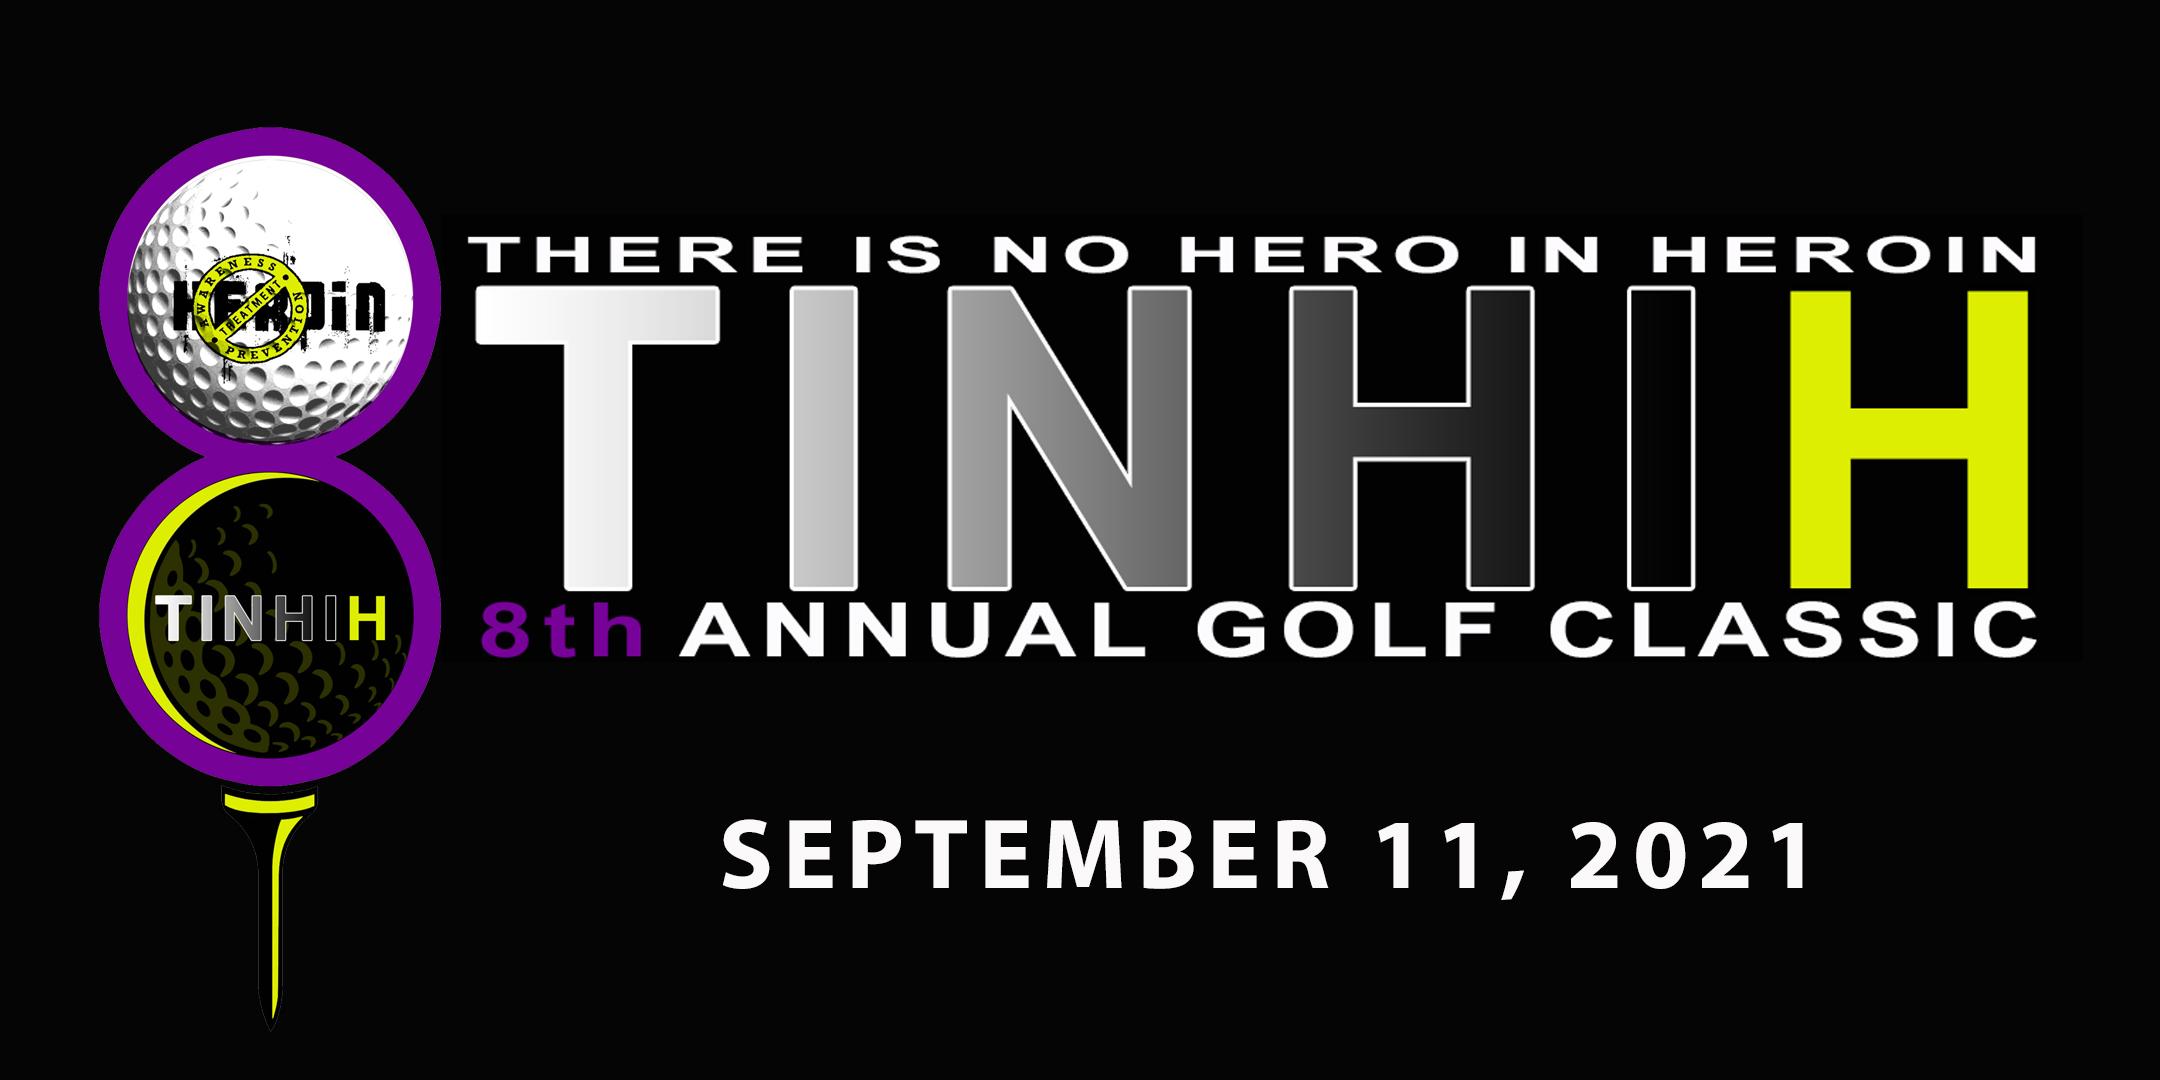 TINHIH's 8th Annual Golf Classic